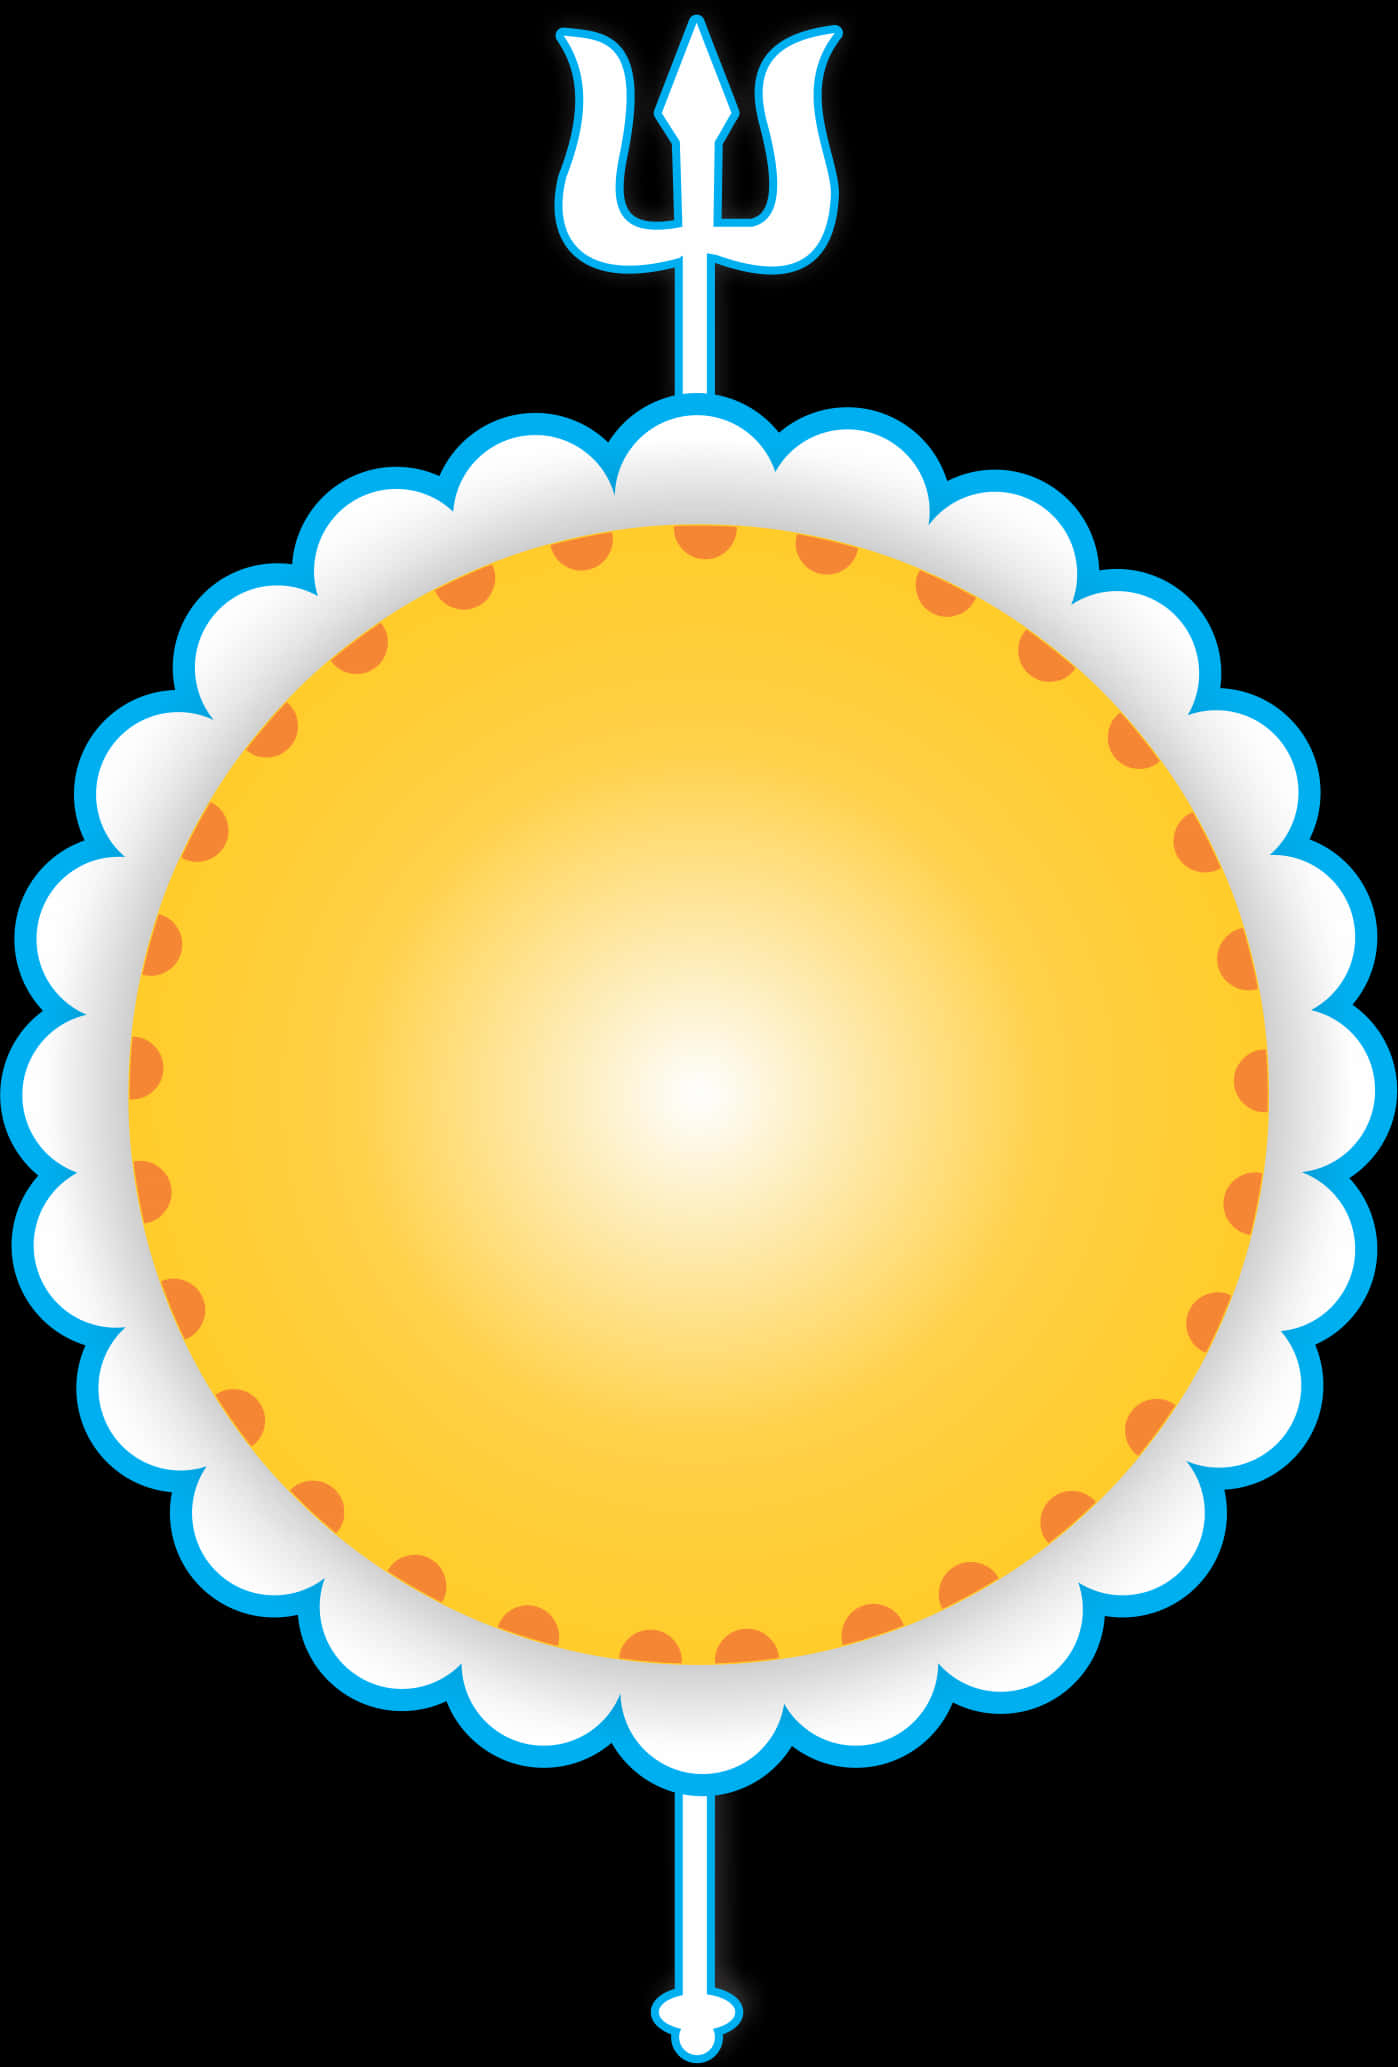 Trishul Emblem On Festive Background PNG image